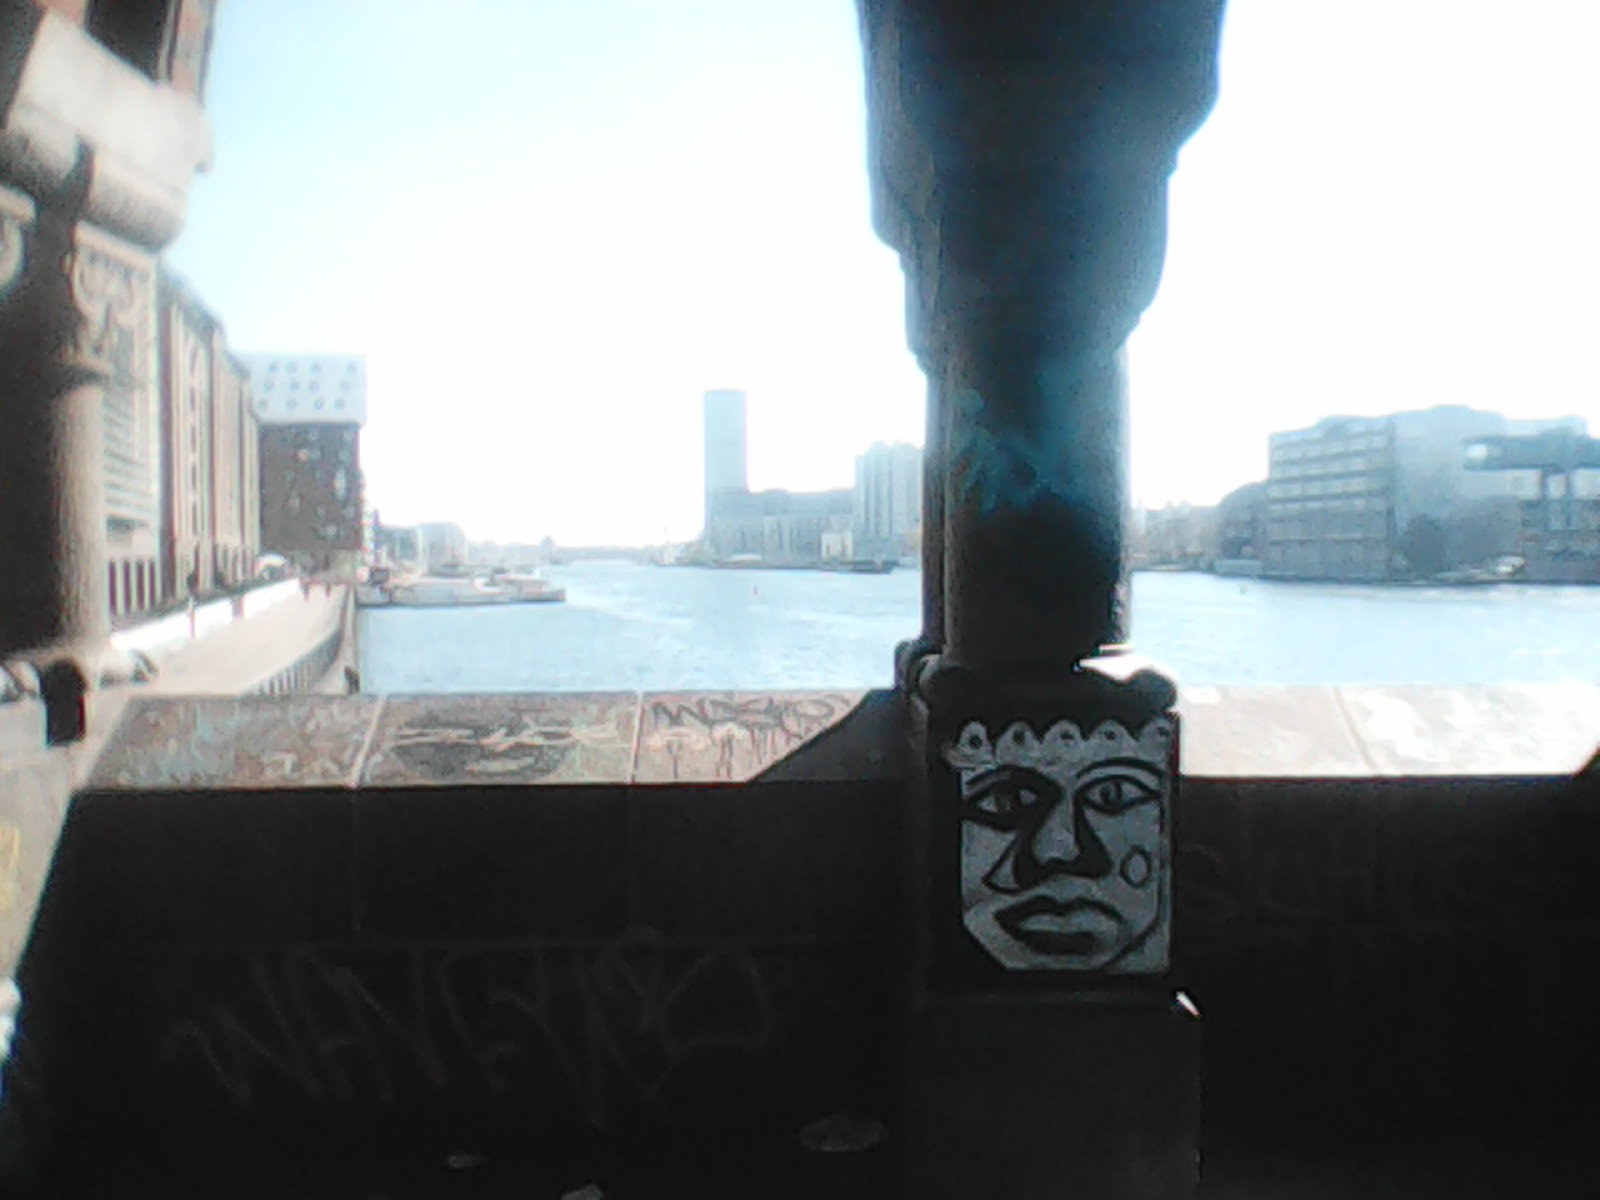 A face painted on a pillar of a bridge.